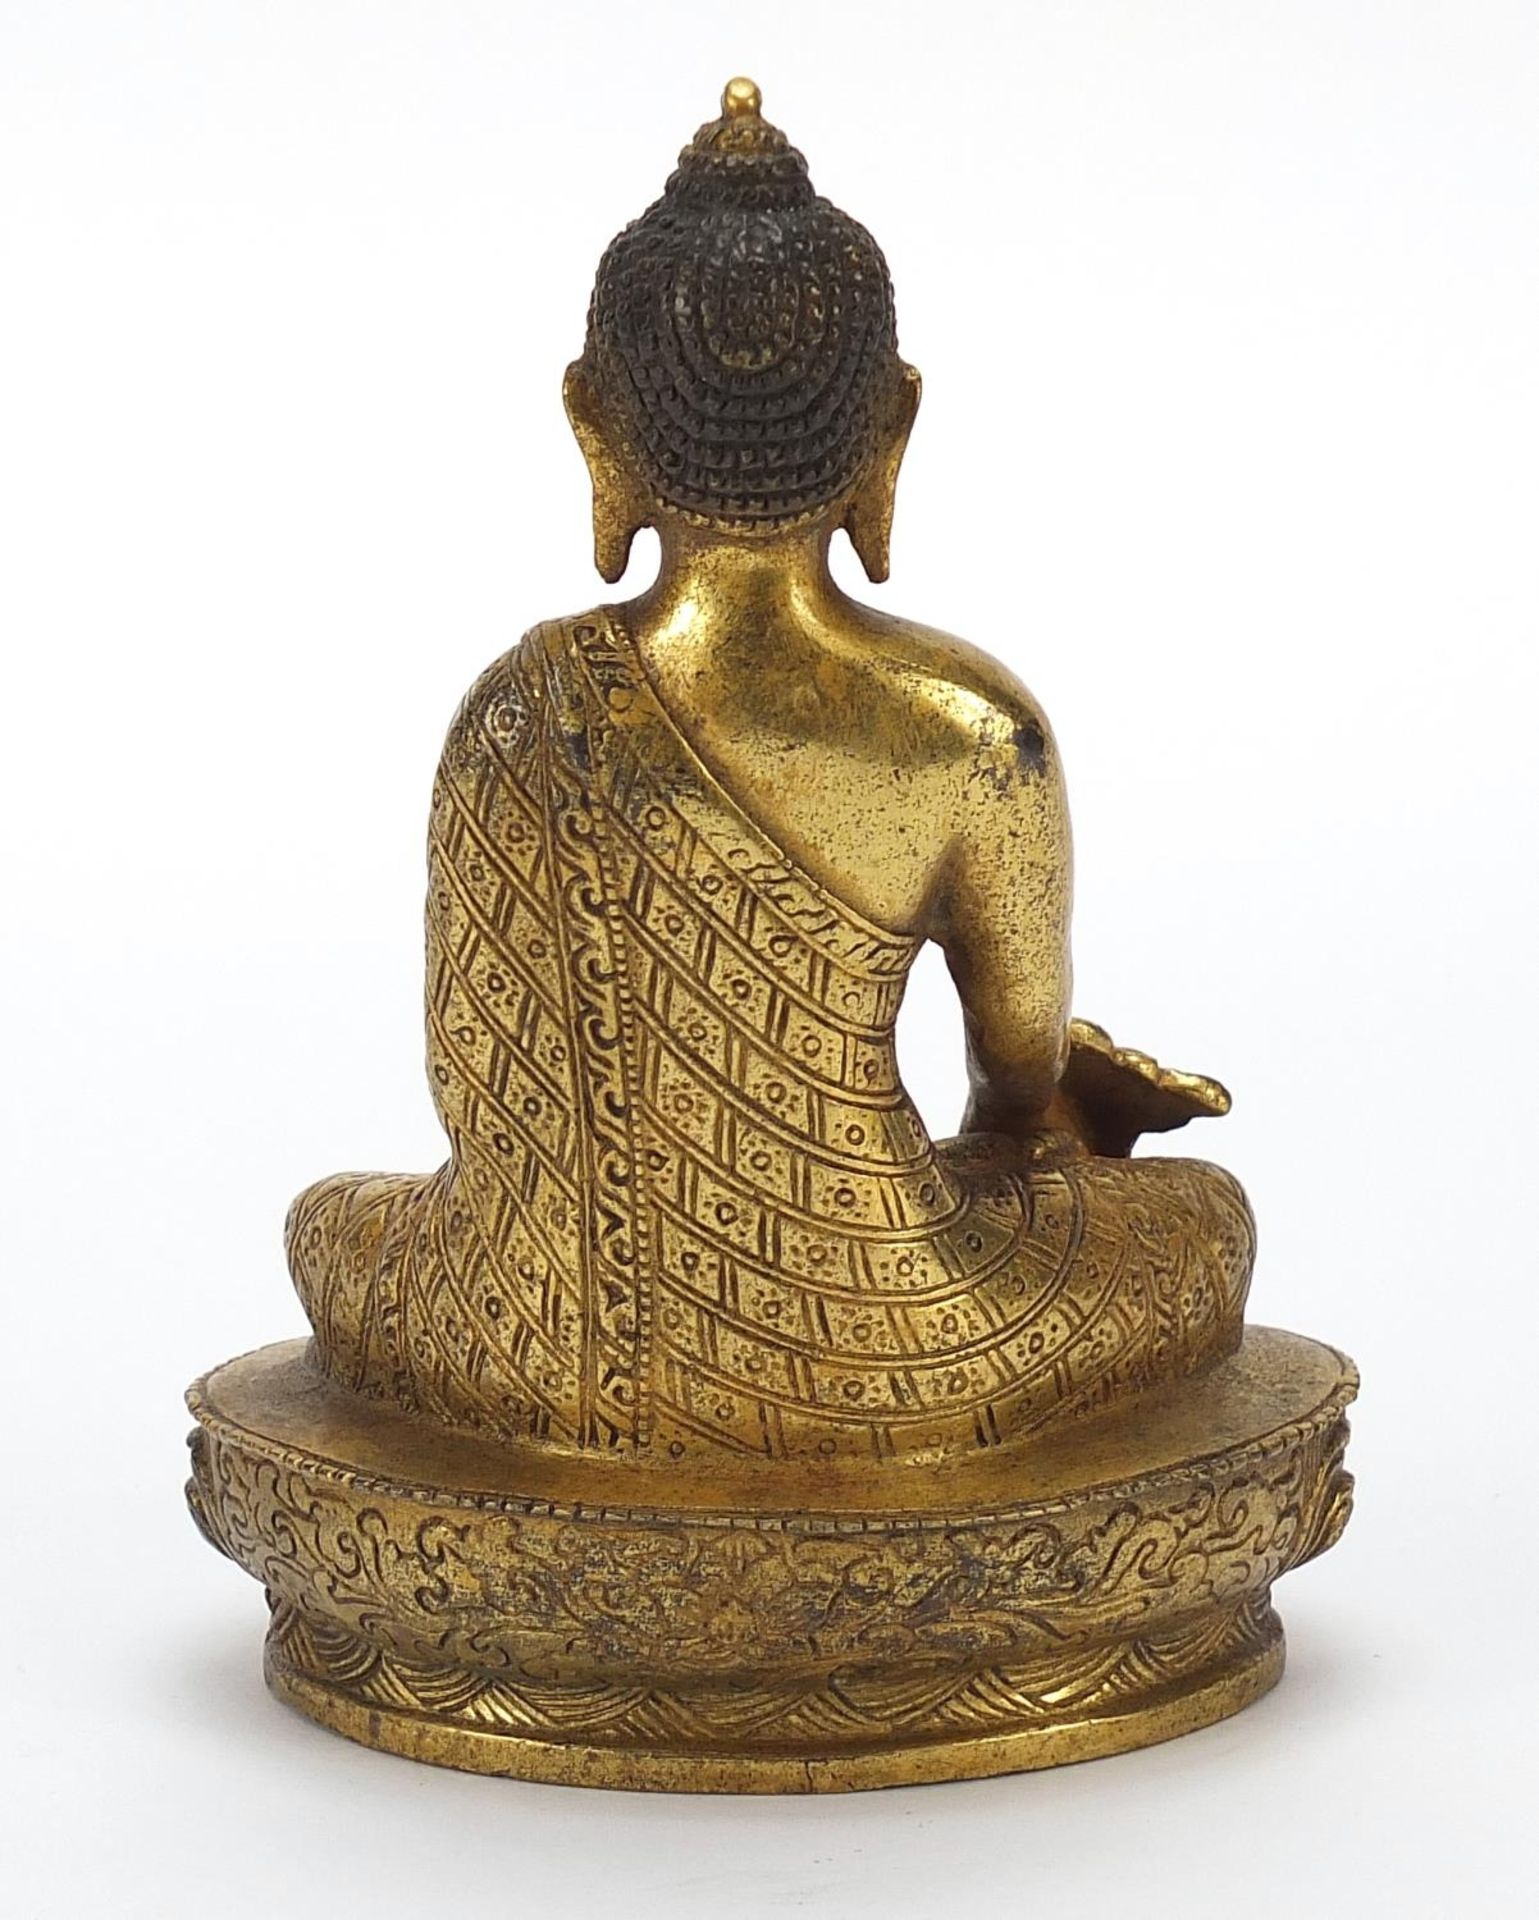 Chino Tibetan gilt bronze figure of seated buddha, 13cm high - Image 4 of 8